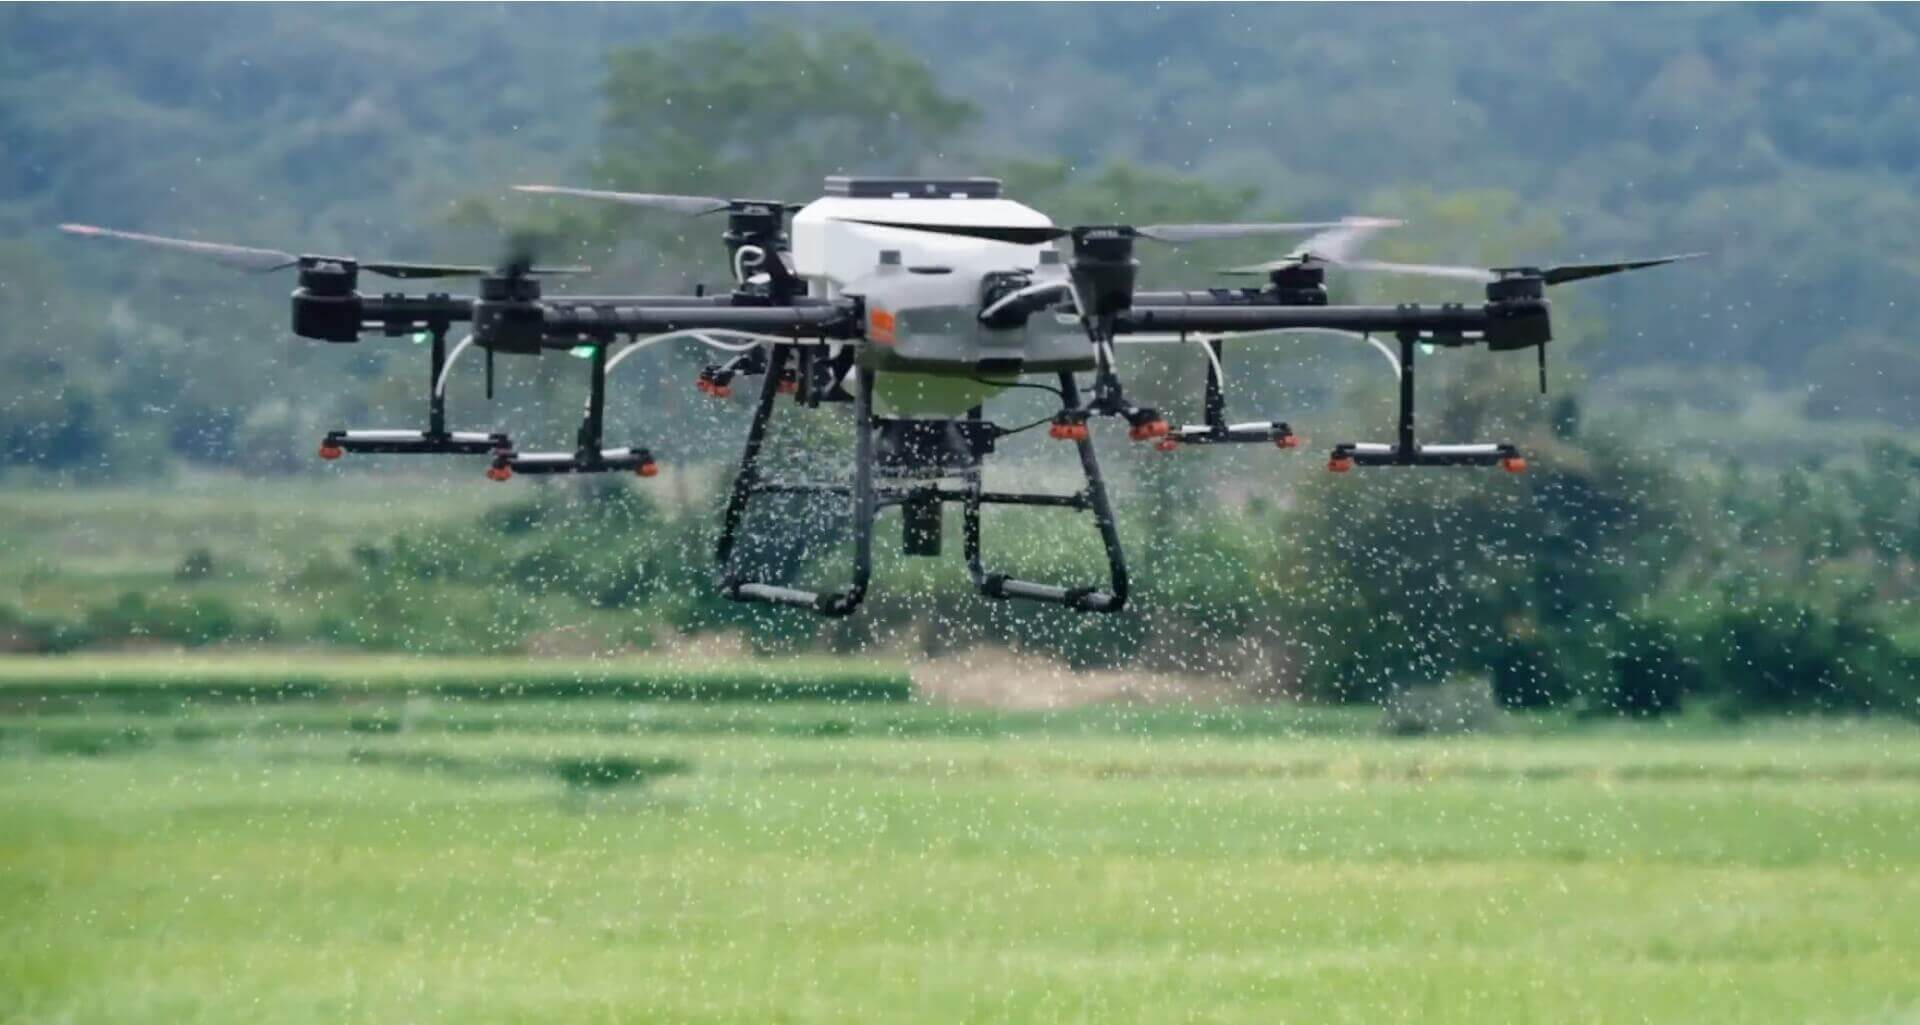 DJI-Agras-T30-Sprayer-Drone